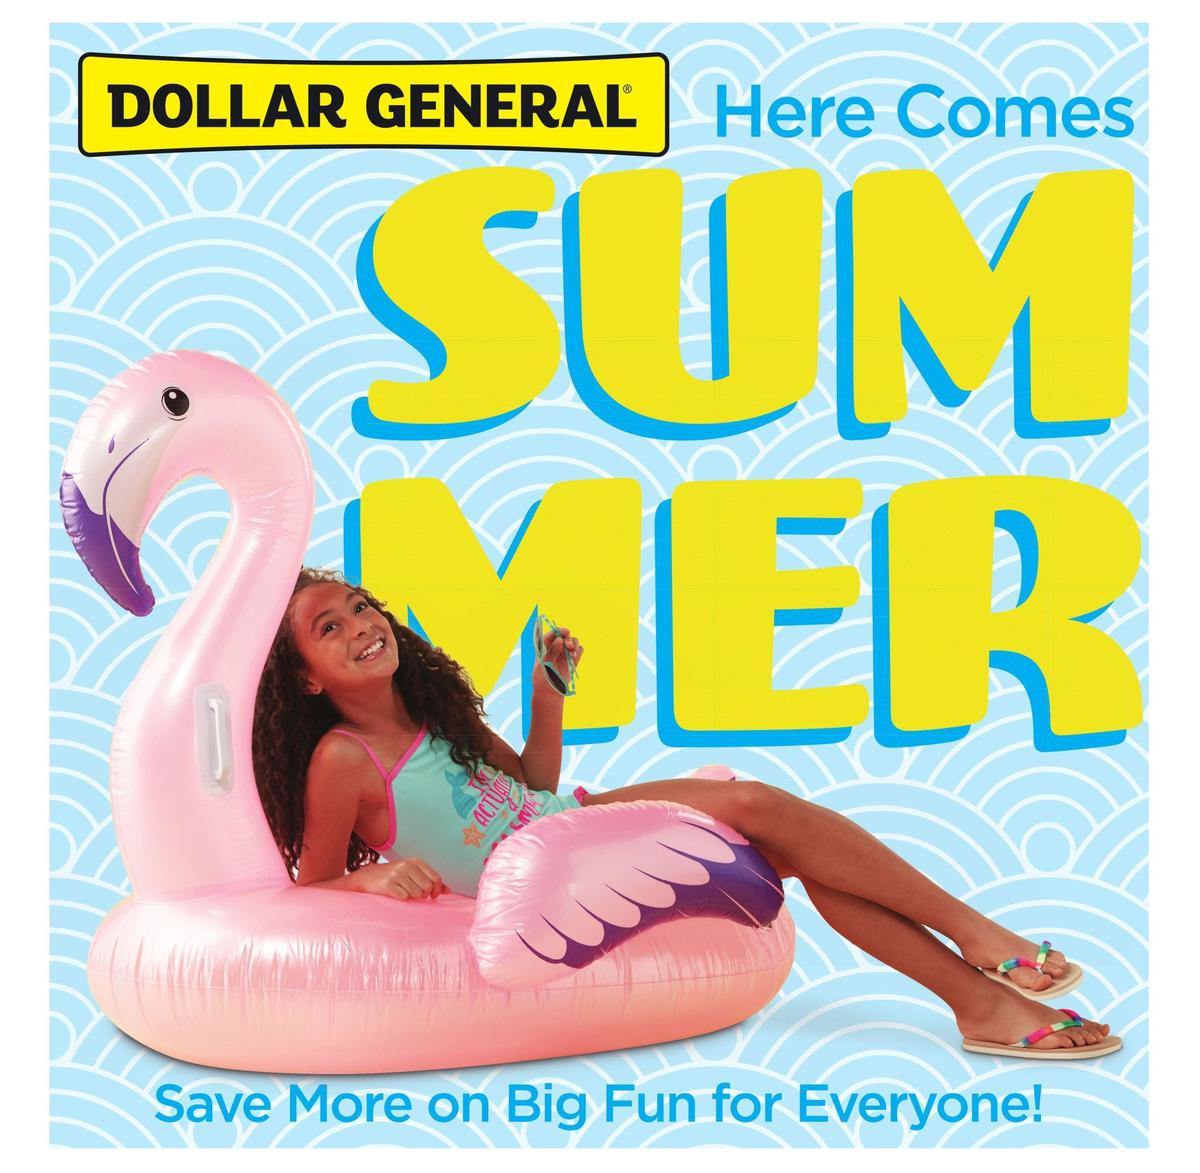 Dollar General Summer Savings Guide Weekly Ad from May 19